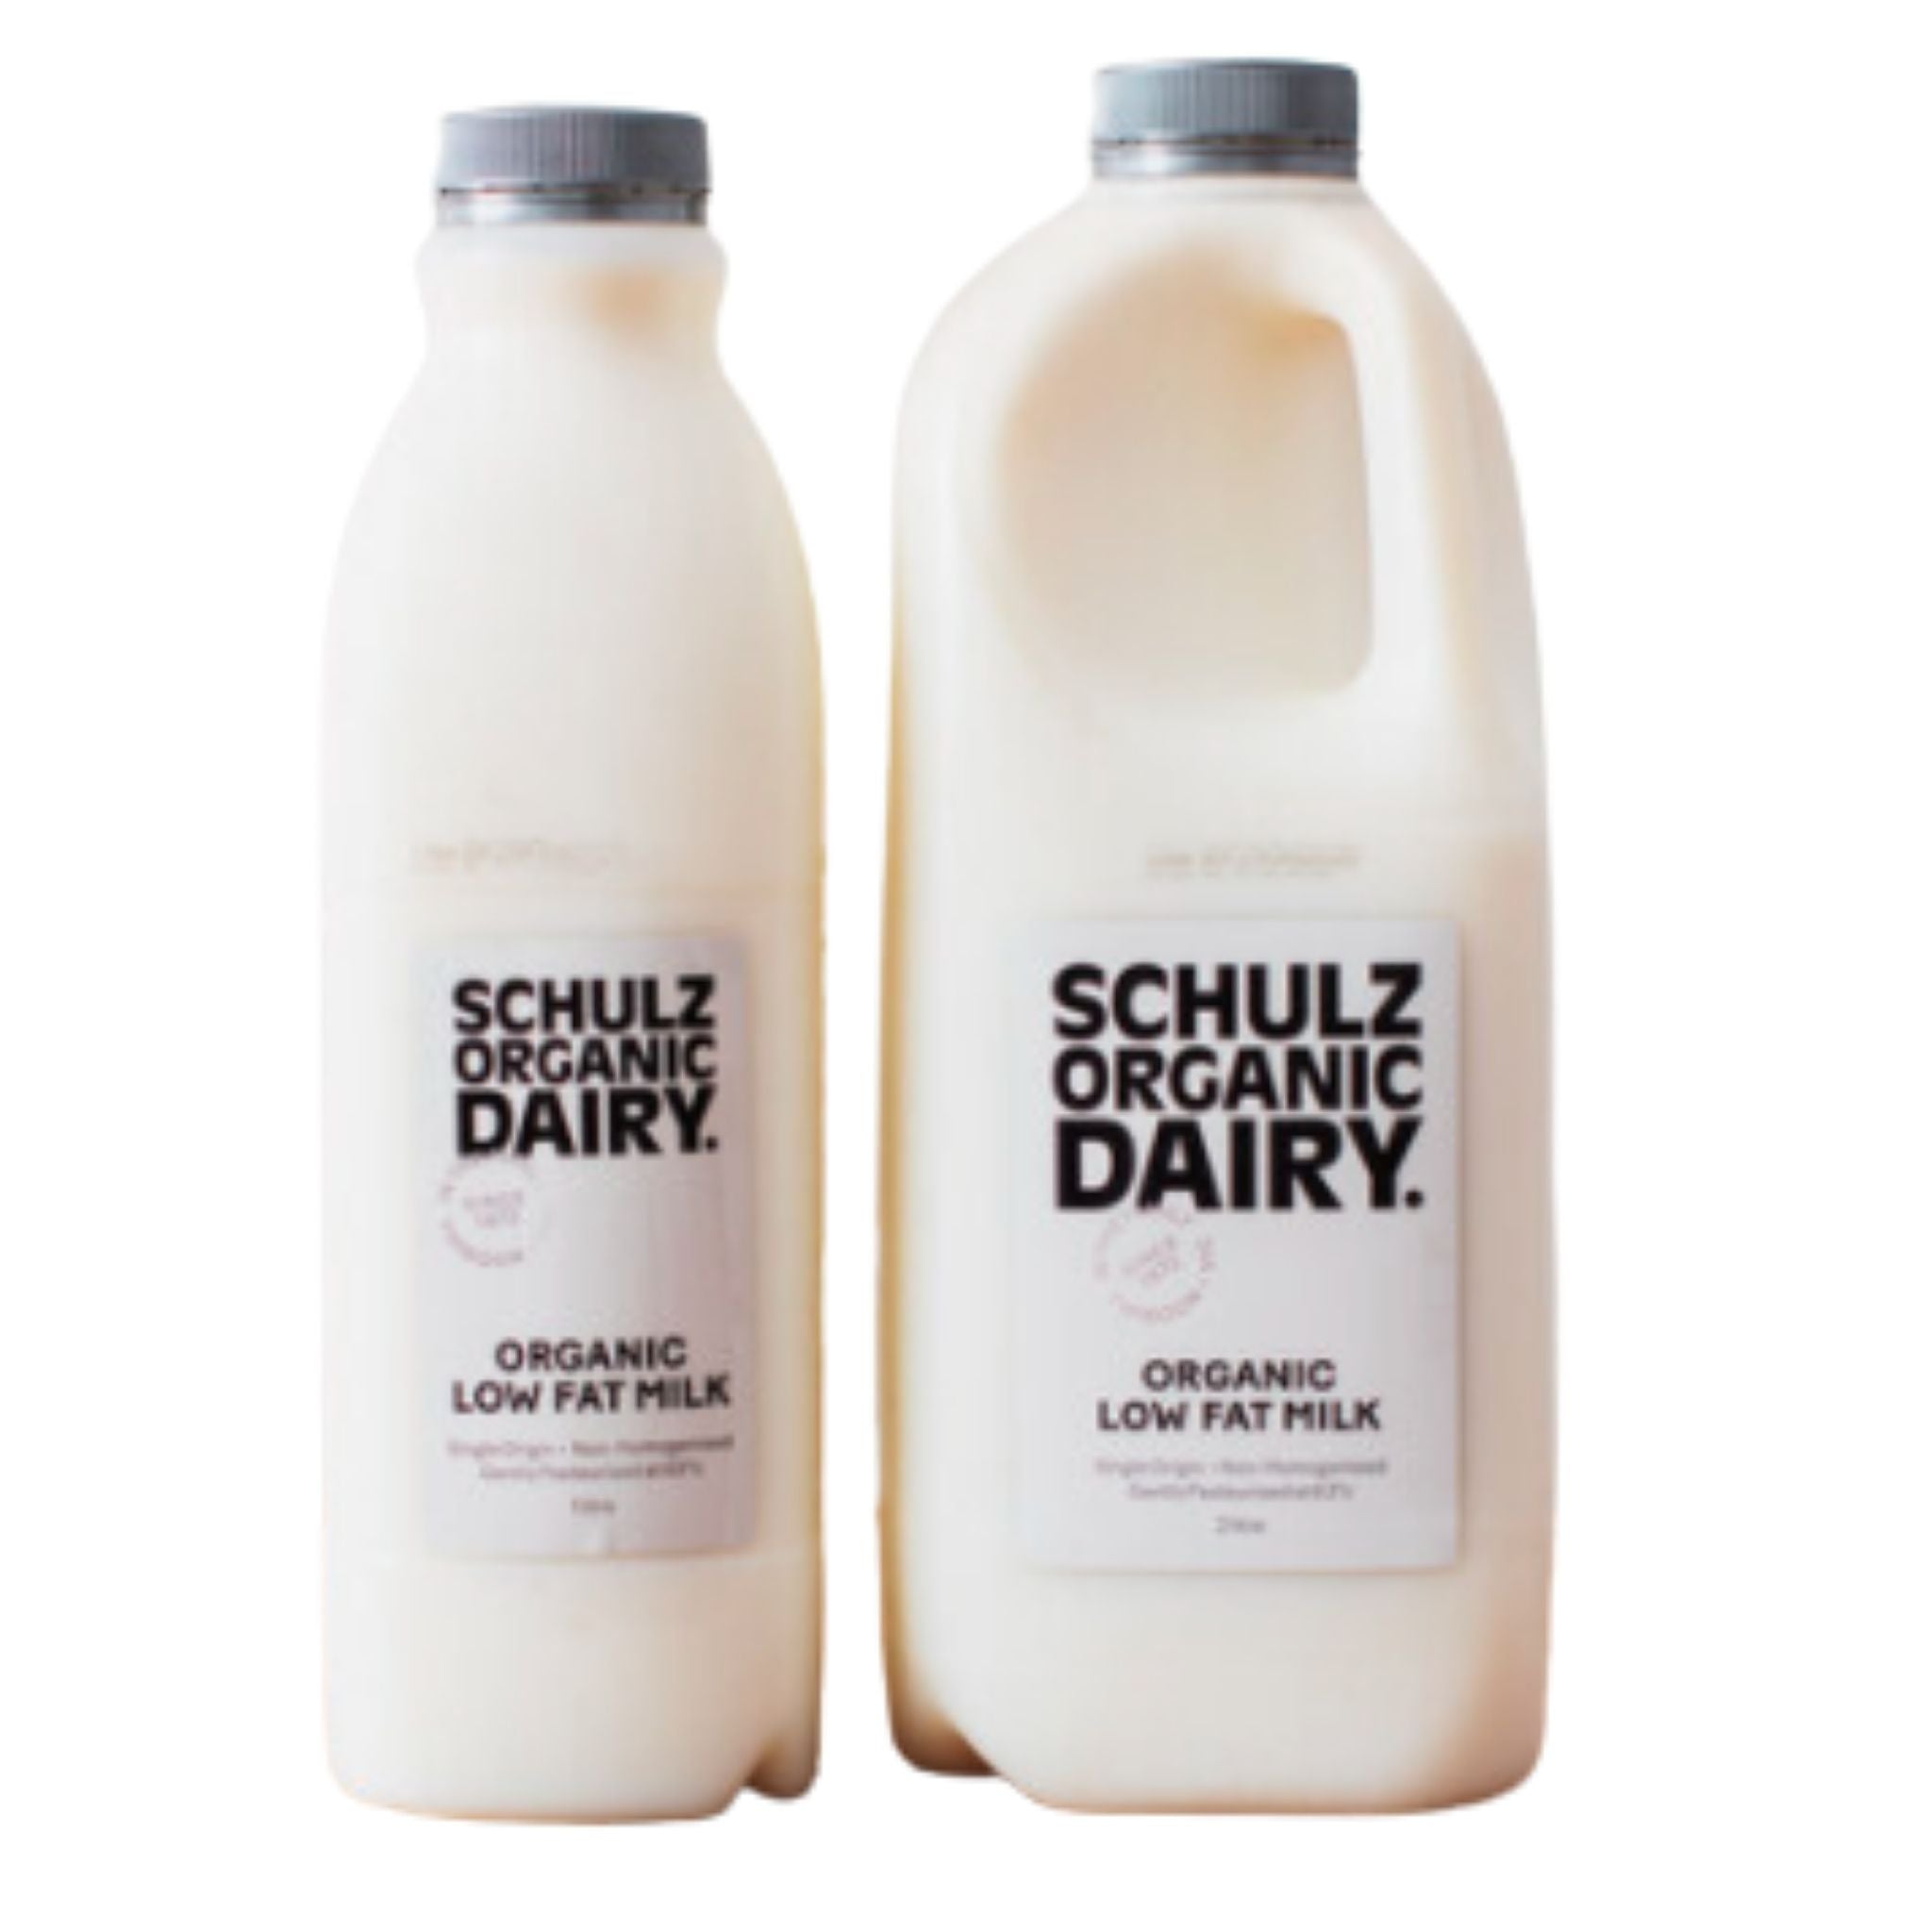 Low Fat Milk. Schulz Organic Dairy